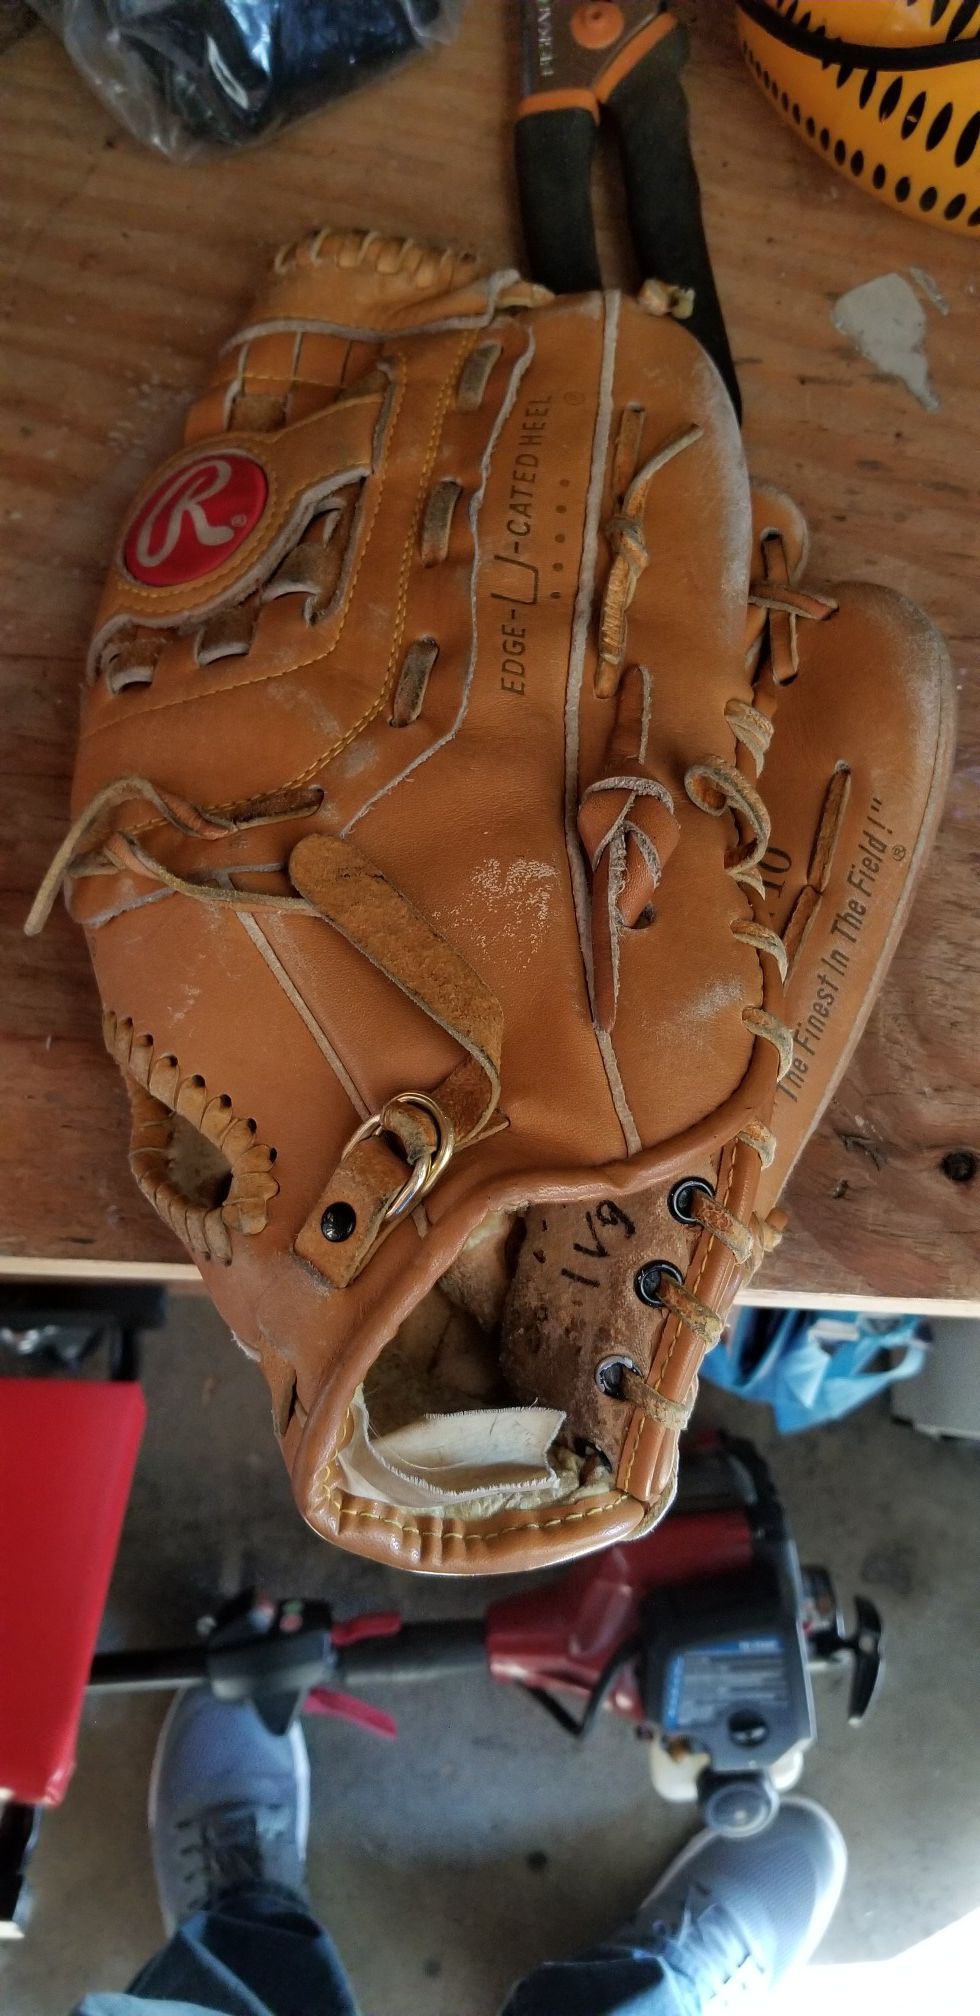 13" Rawlings baseball softball glove broken in